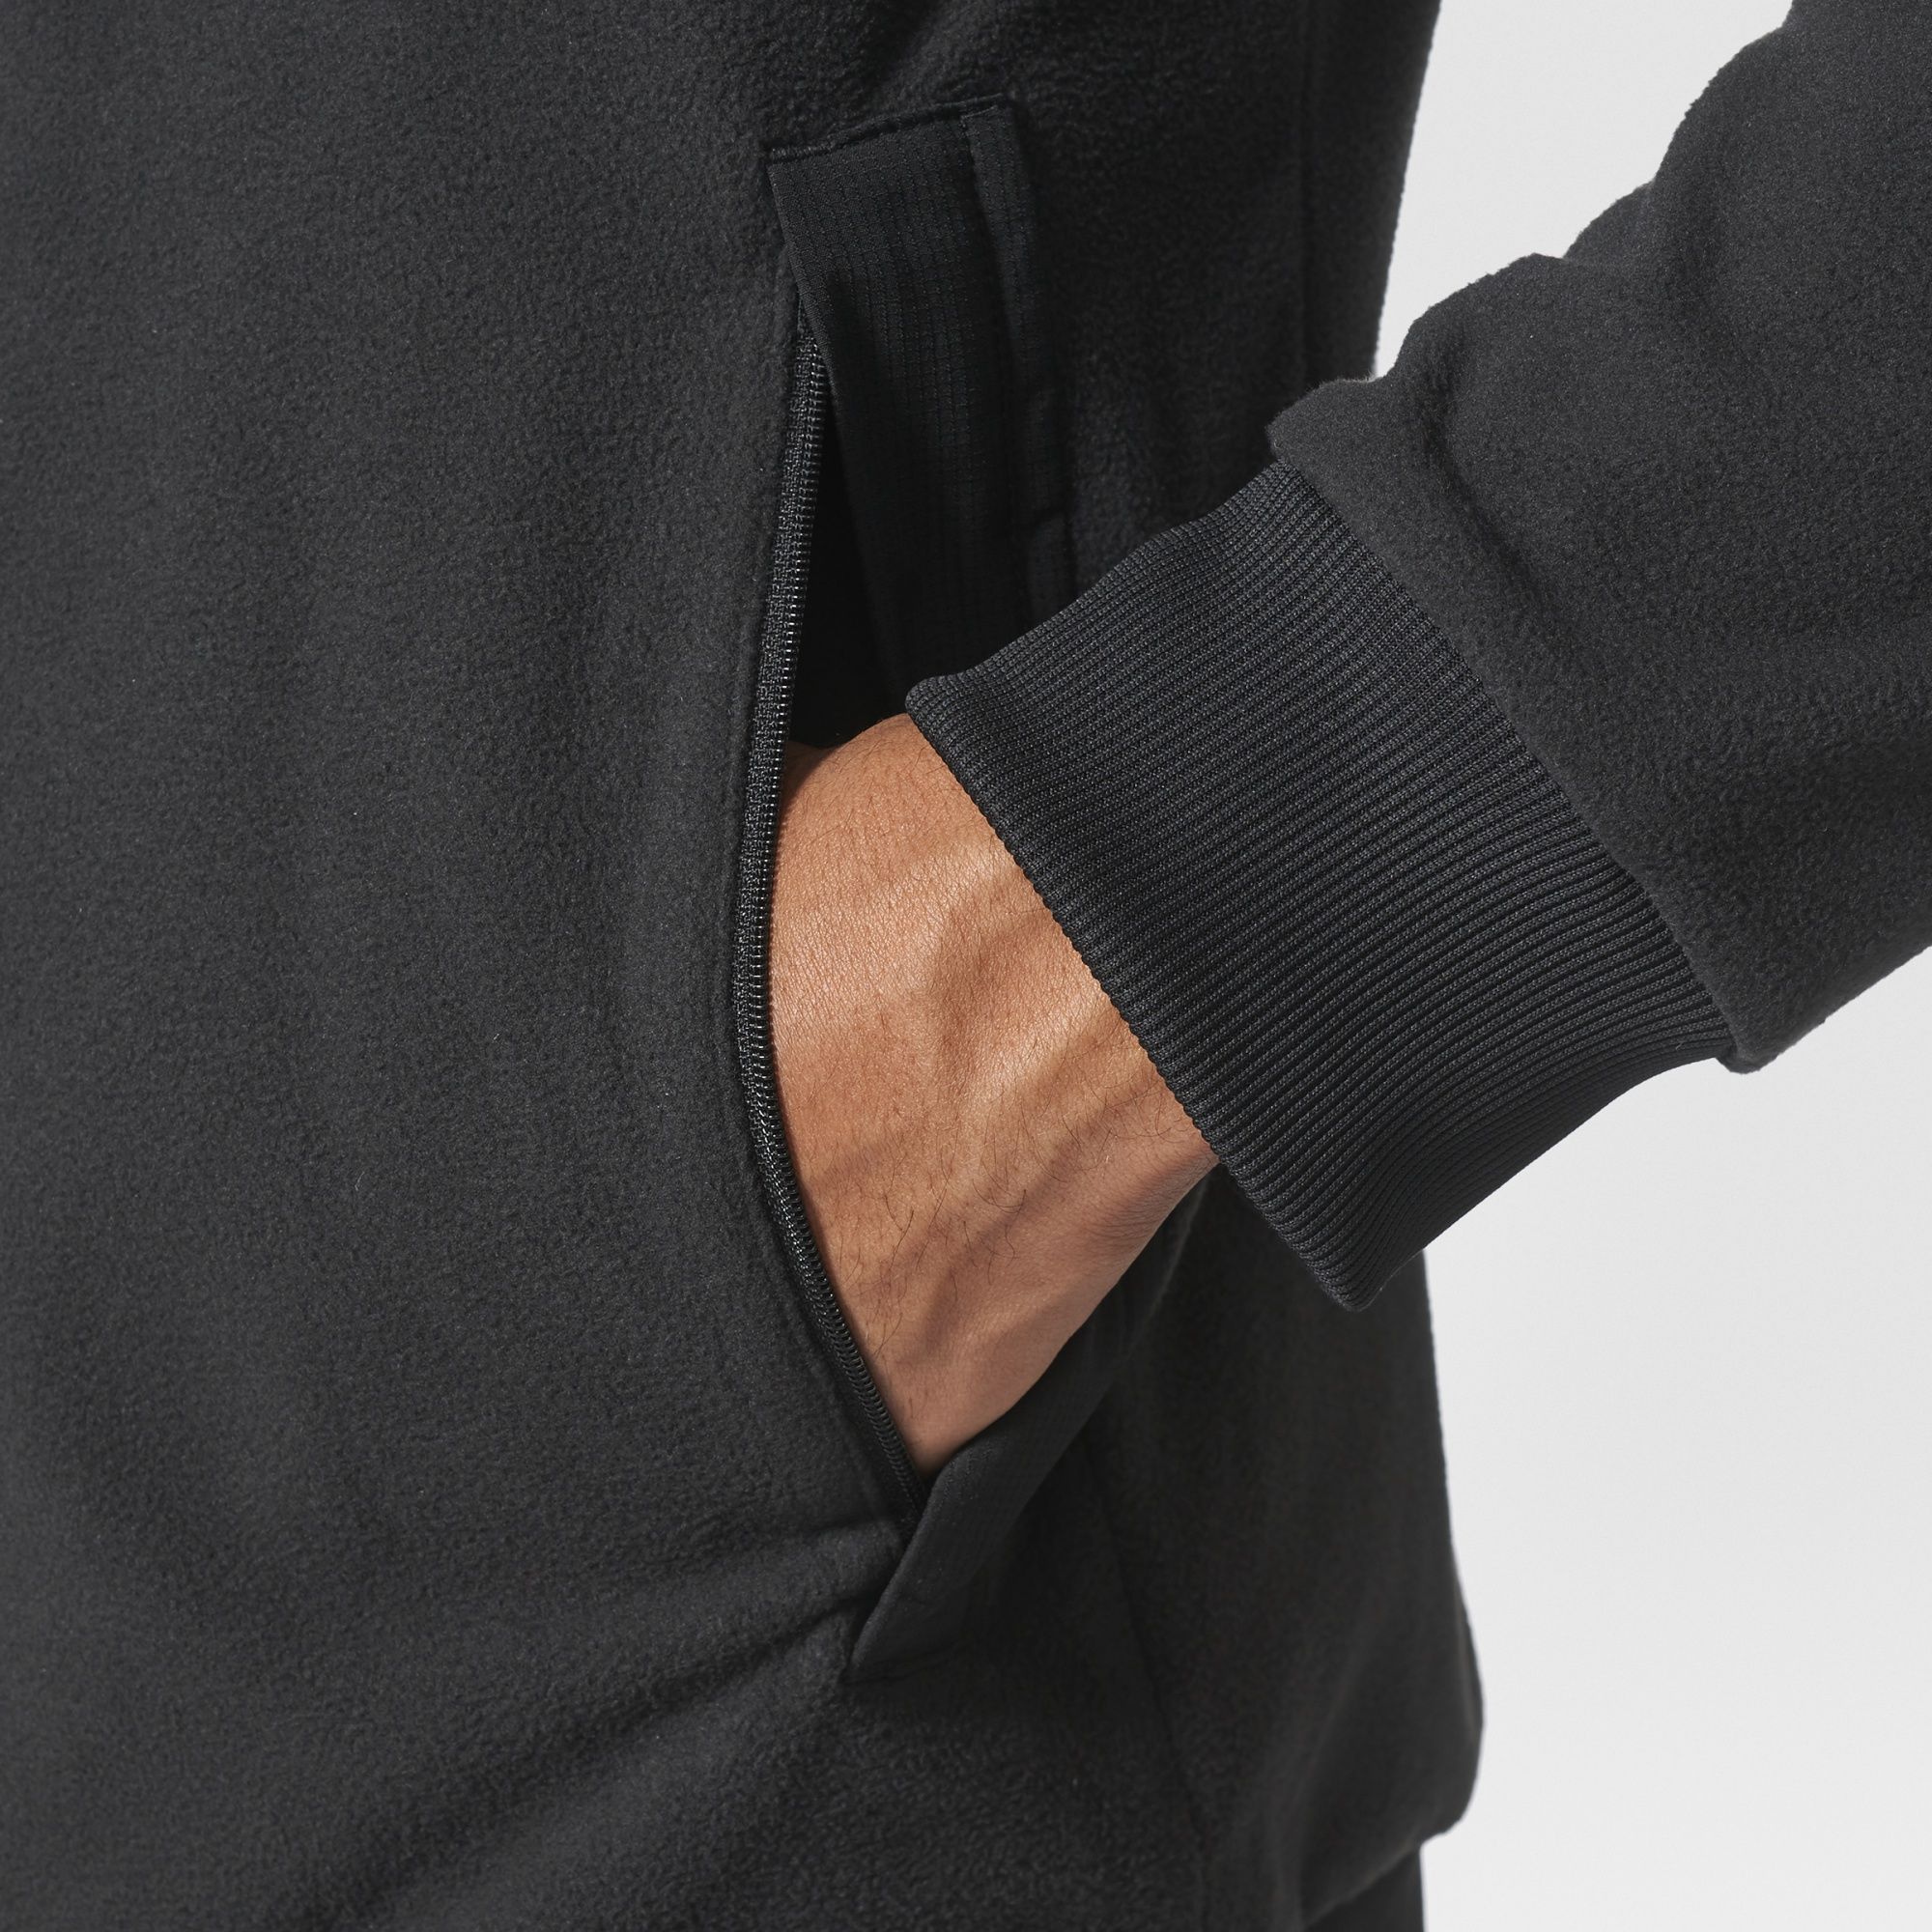 Adidas Tango Hybrid Fleece Jacket - Black - Football Shirt Culture ...